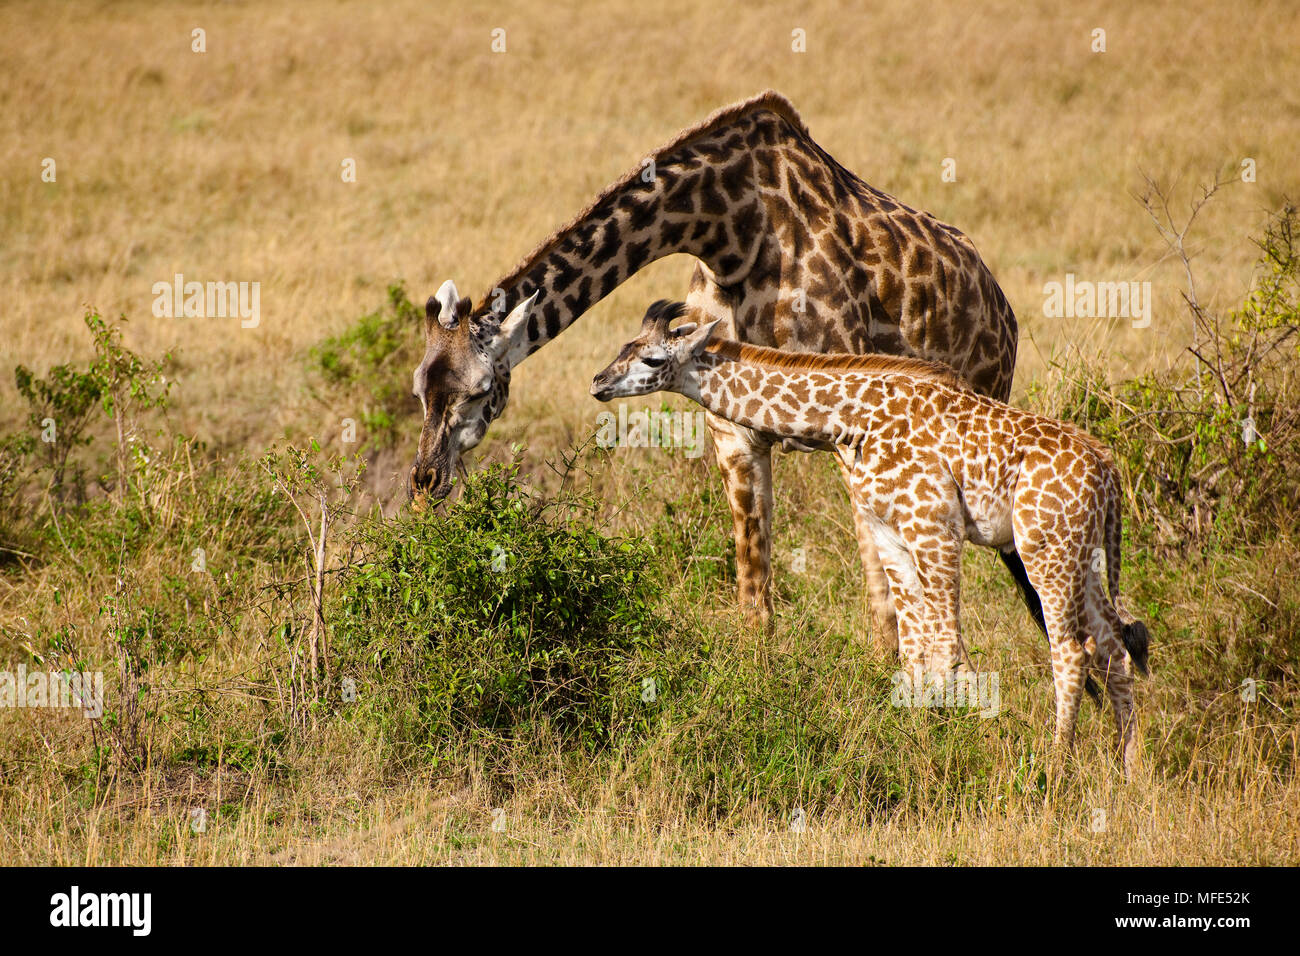 Junge gemeinsame Giraffe mit Mutter, Giraffe camelopardalis, Masai Mara, Kenia. Stockfoto